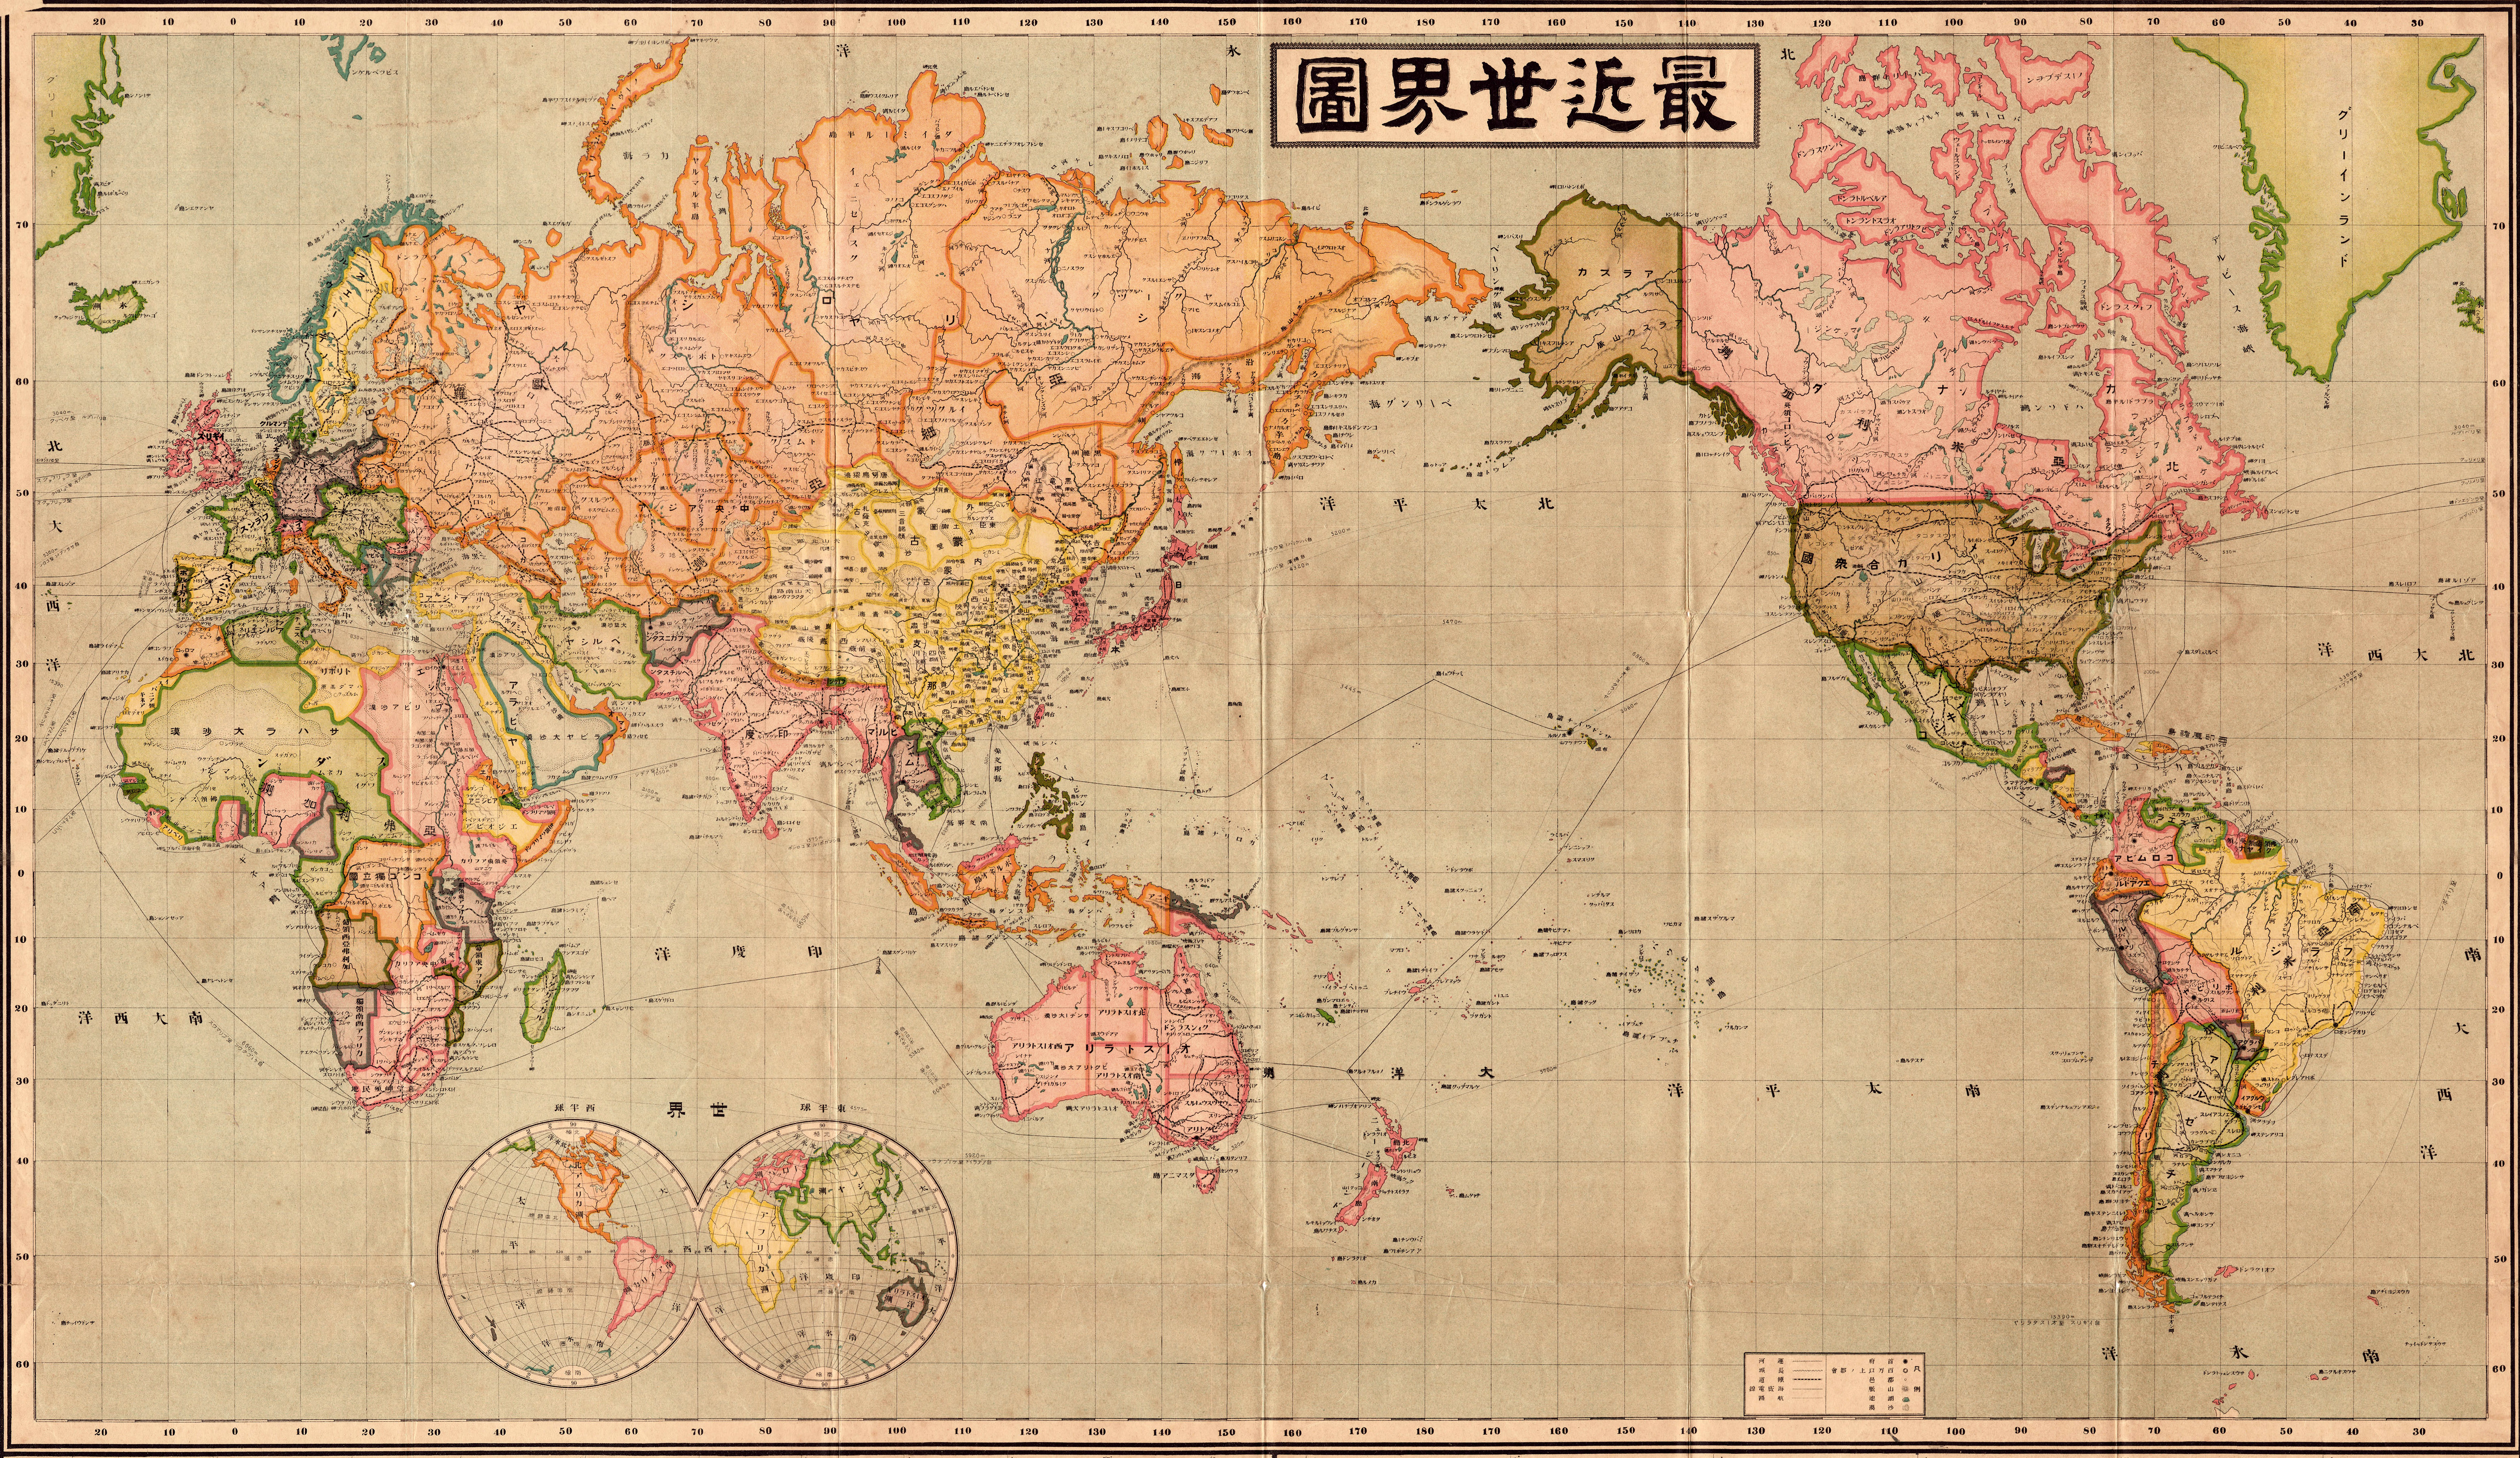 http://jackhughesmsa.files.wordpress.com/2011/11/japan_world_map_1914.jpg